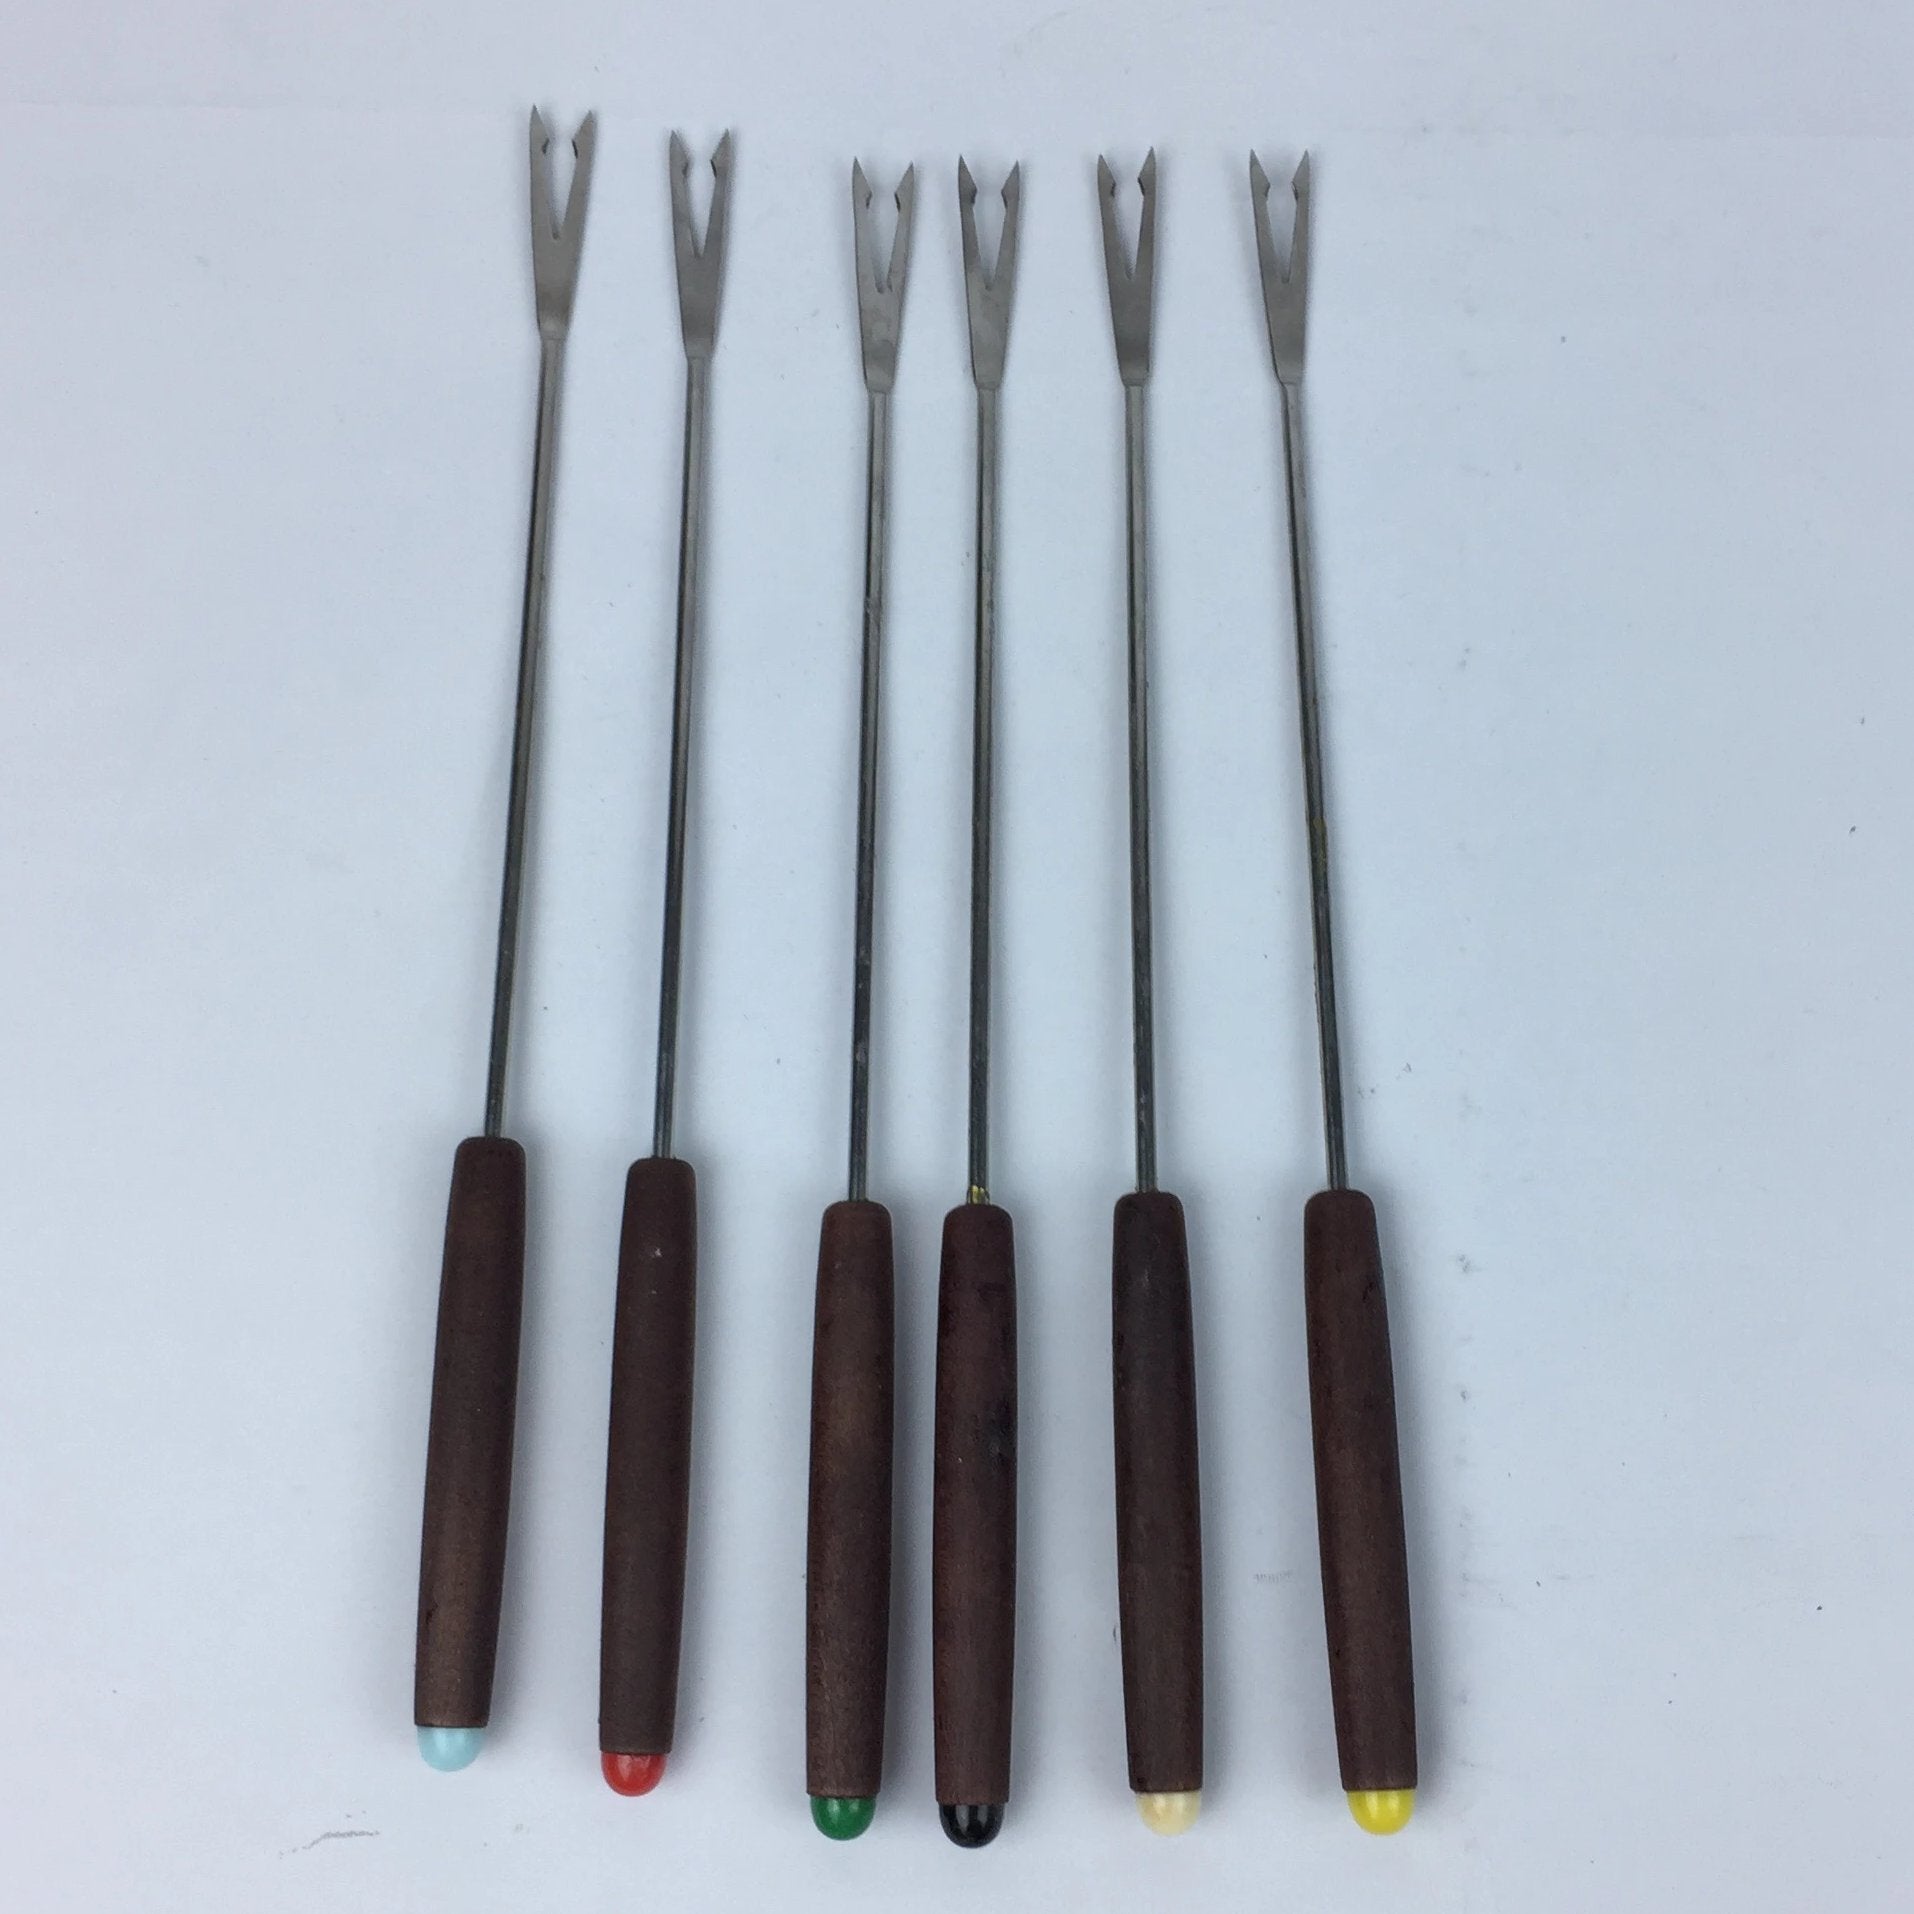 Vintage Oster Fondue Forks - Set of 6 - Wood Handles - Colored Coded Ends